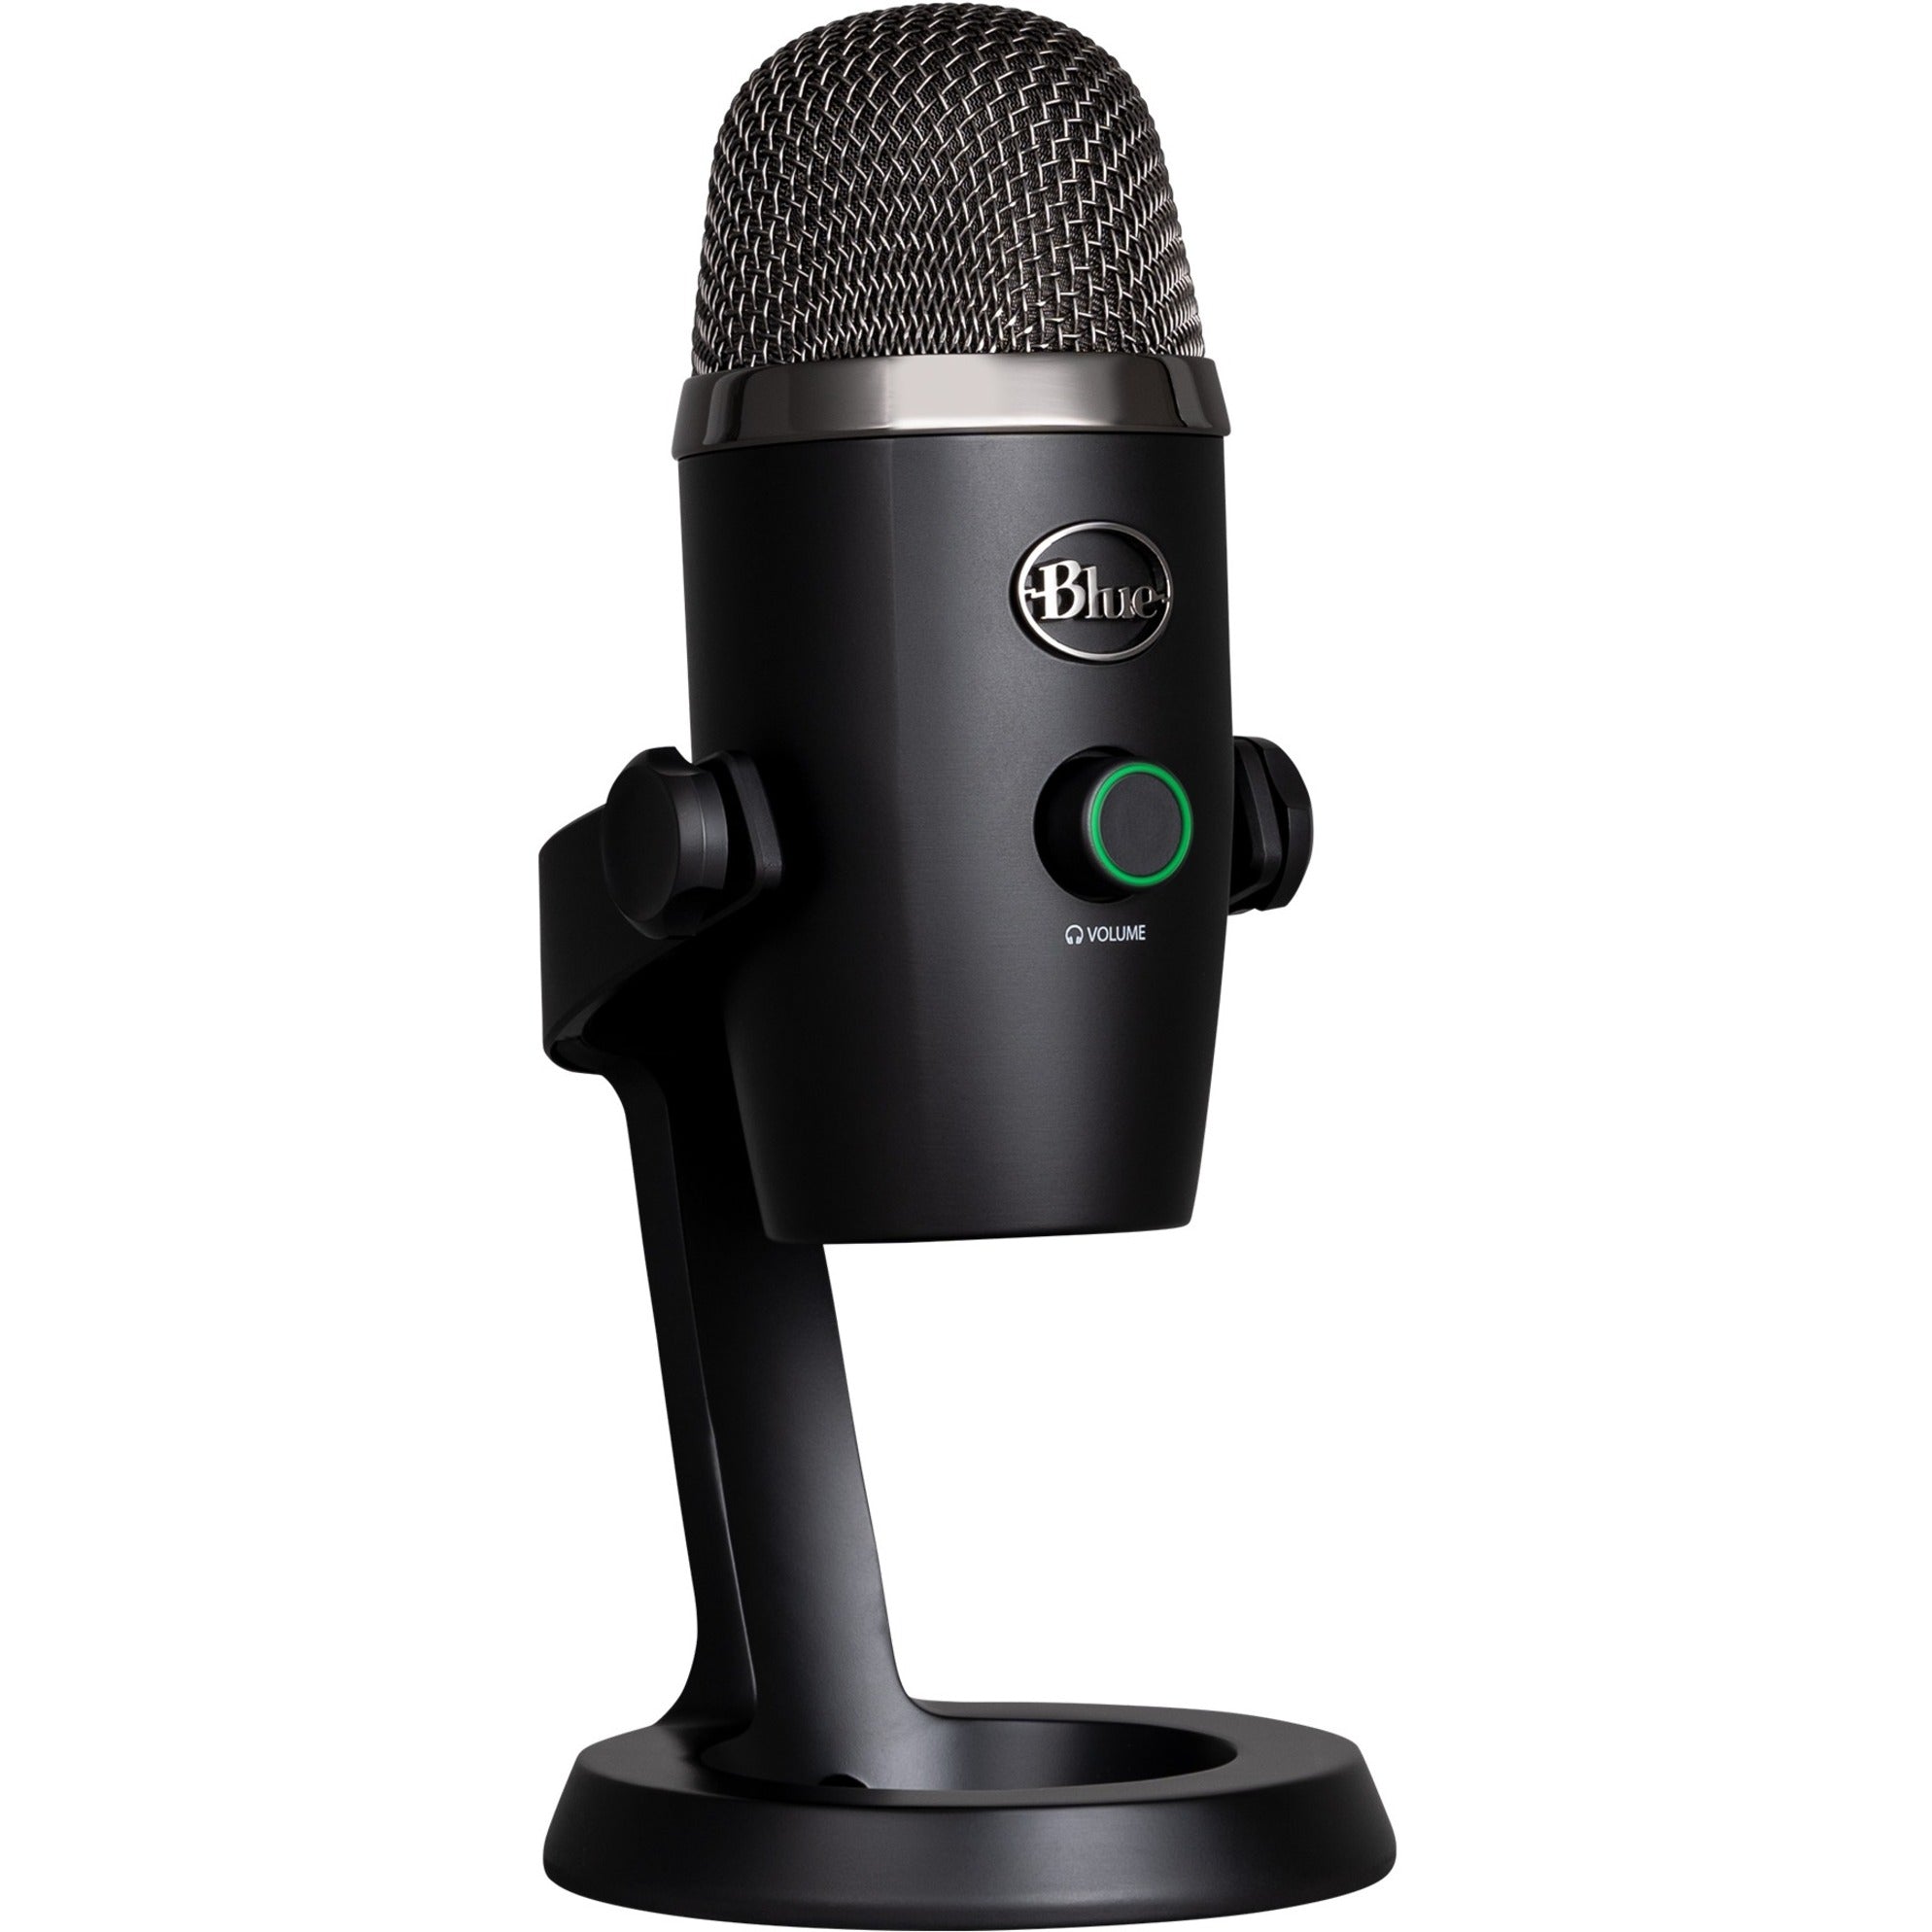 Blue 988-000400 Yeti Nano Premium USB Microphone for Recording & Streaming